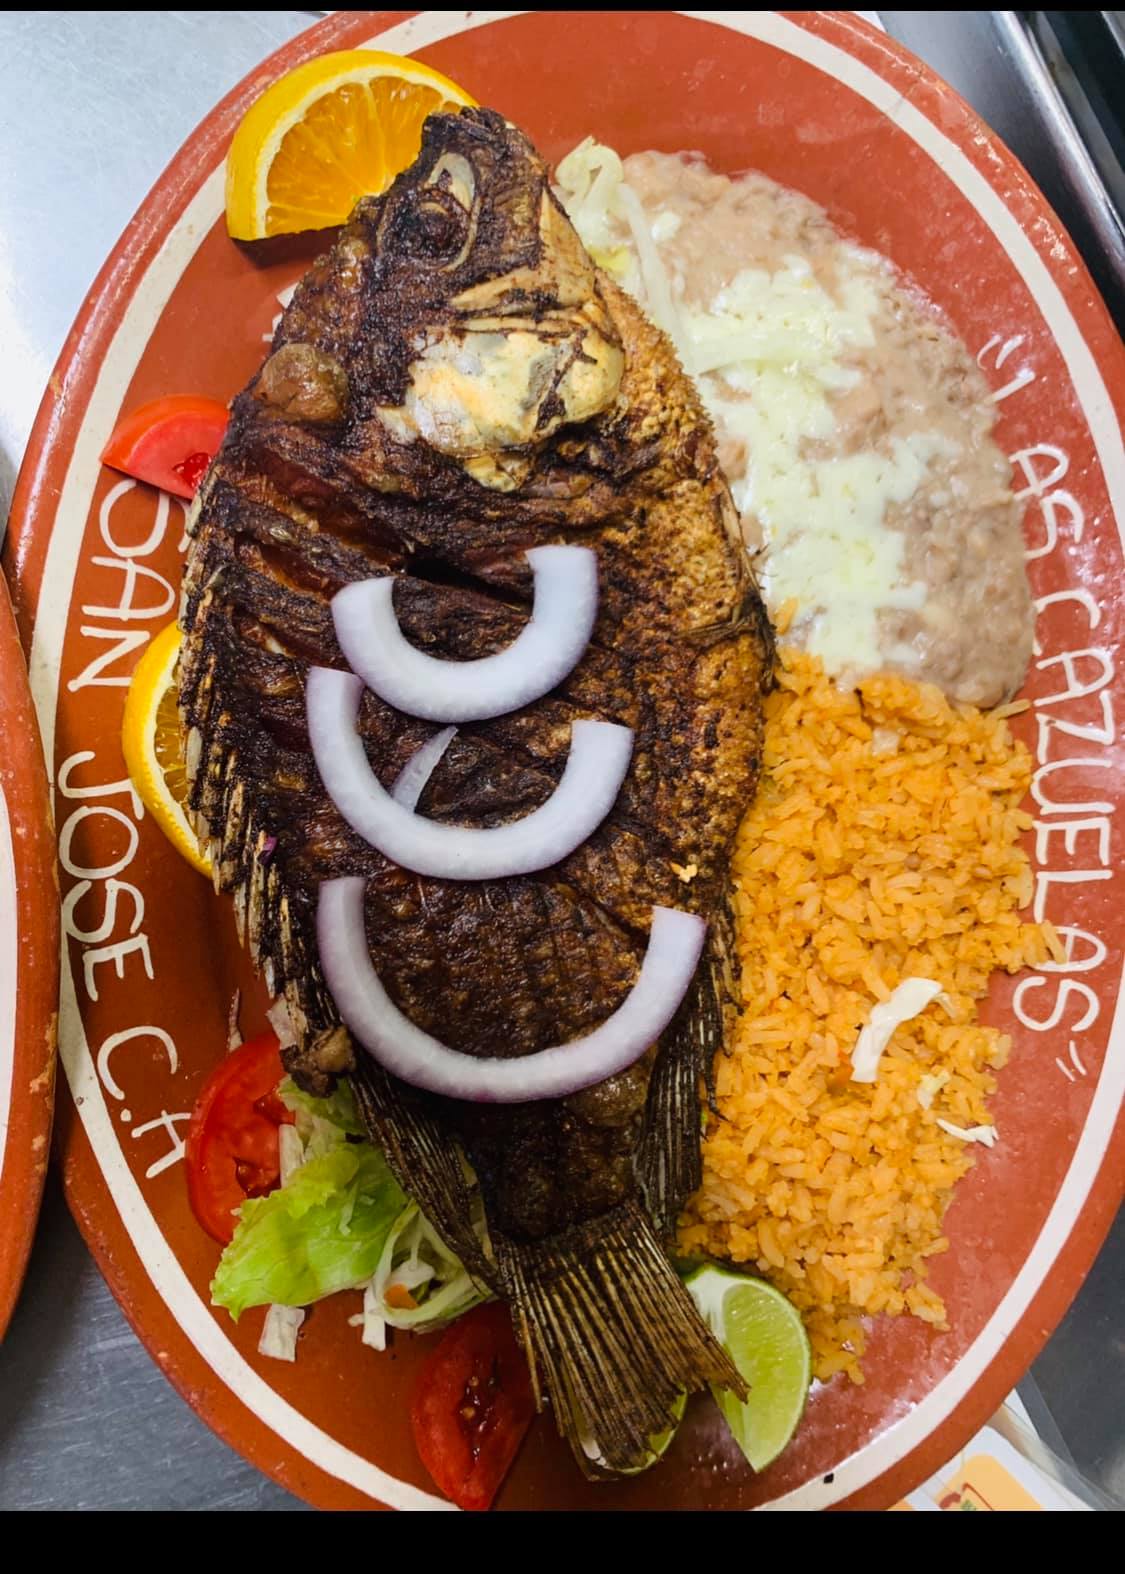 https://0201.nccdn.net/1_2/000/000/0b8/817/cazuelas-food-on-plate-3.jpg